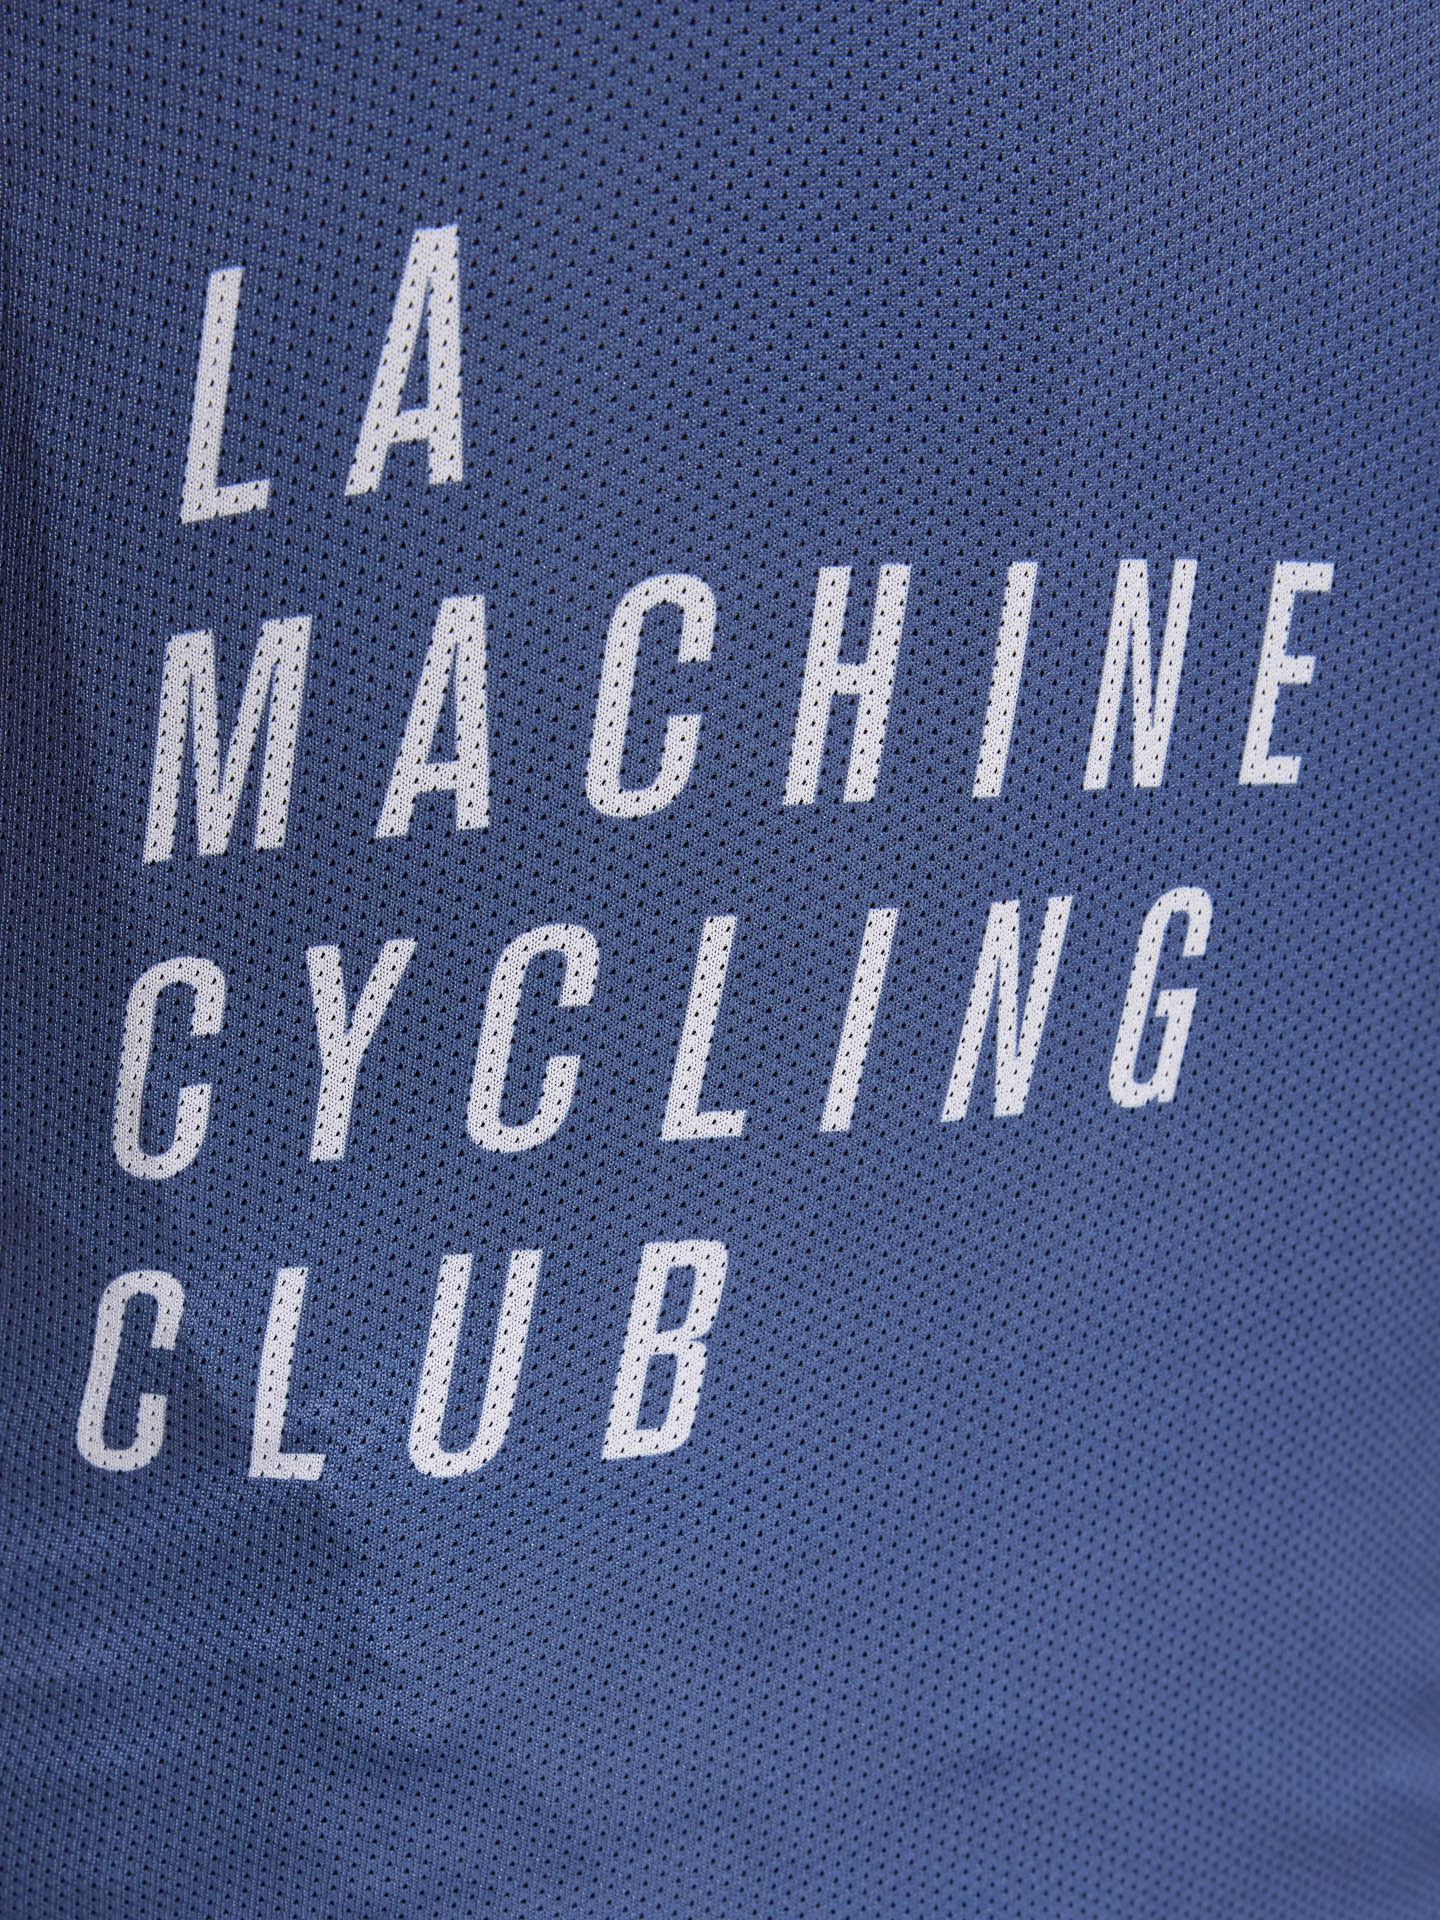 Wind Gilet - Performance gear - La Machine Cycle Club